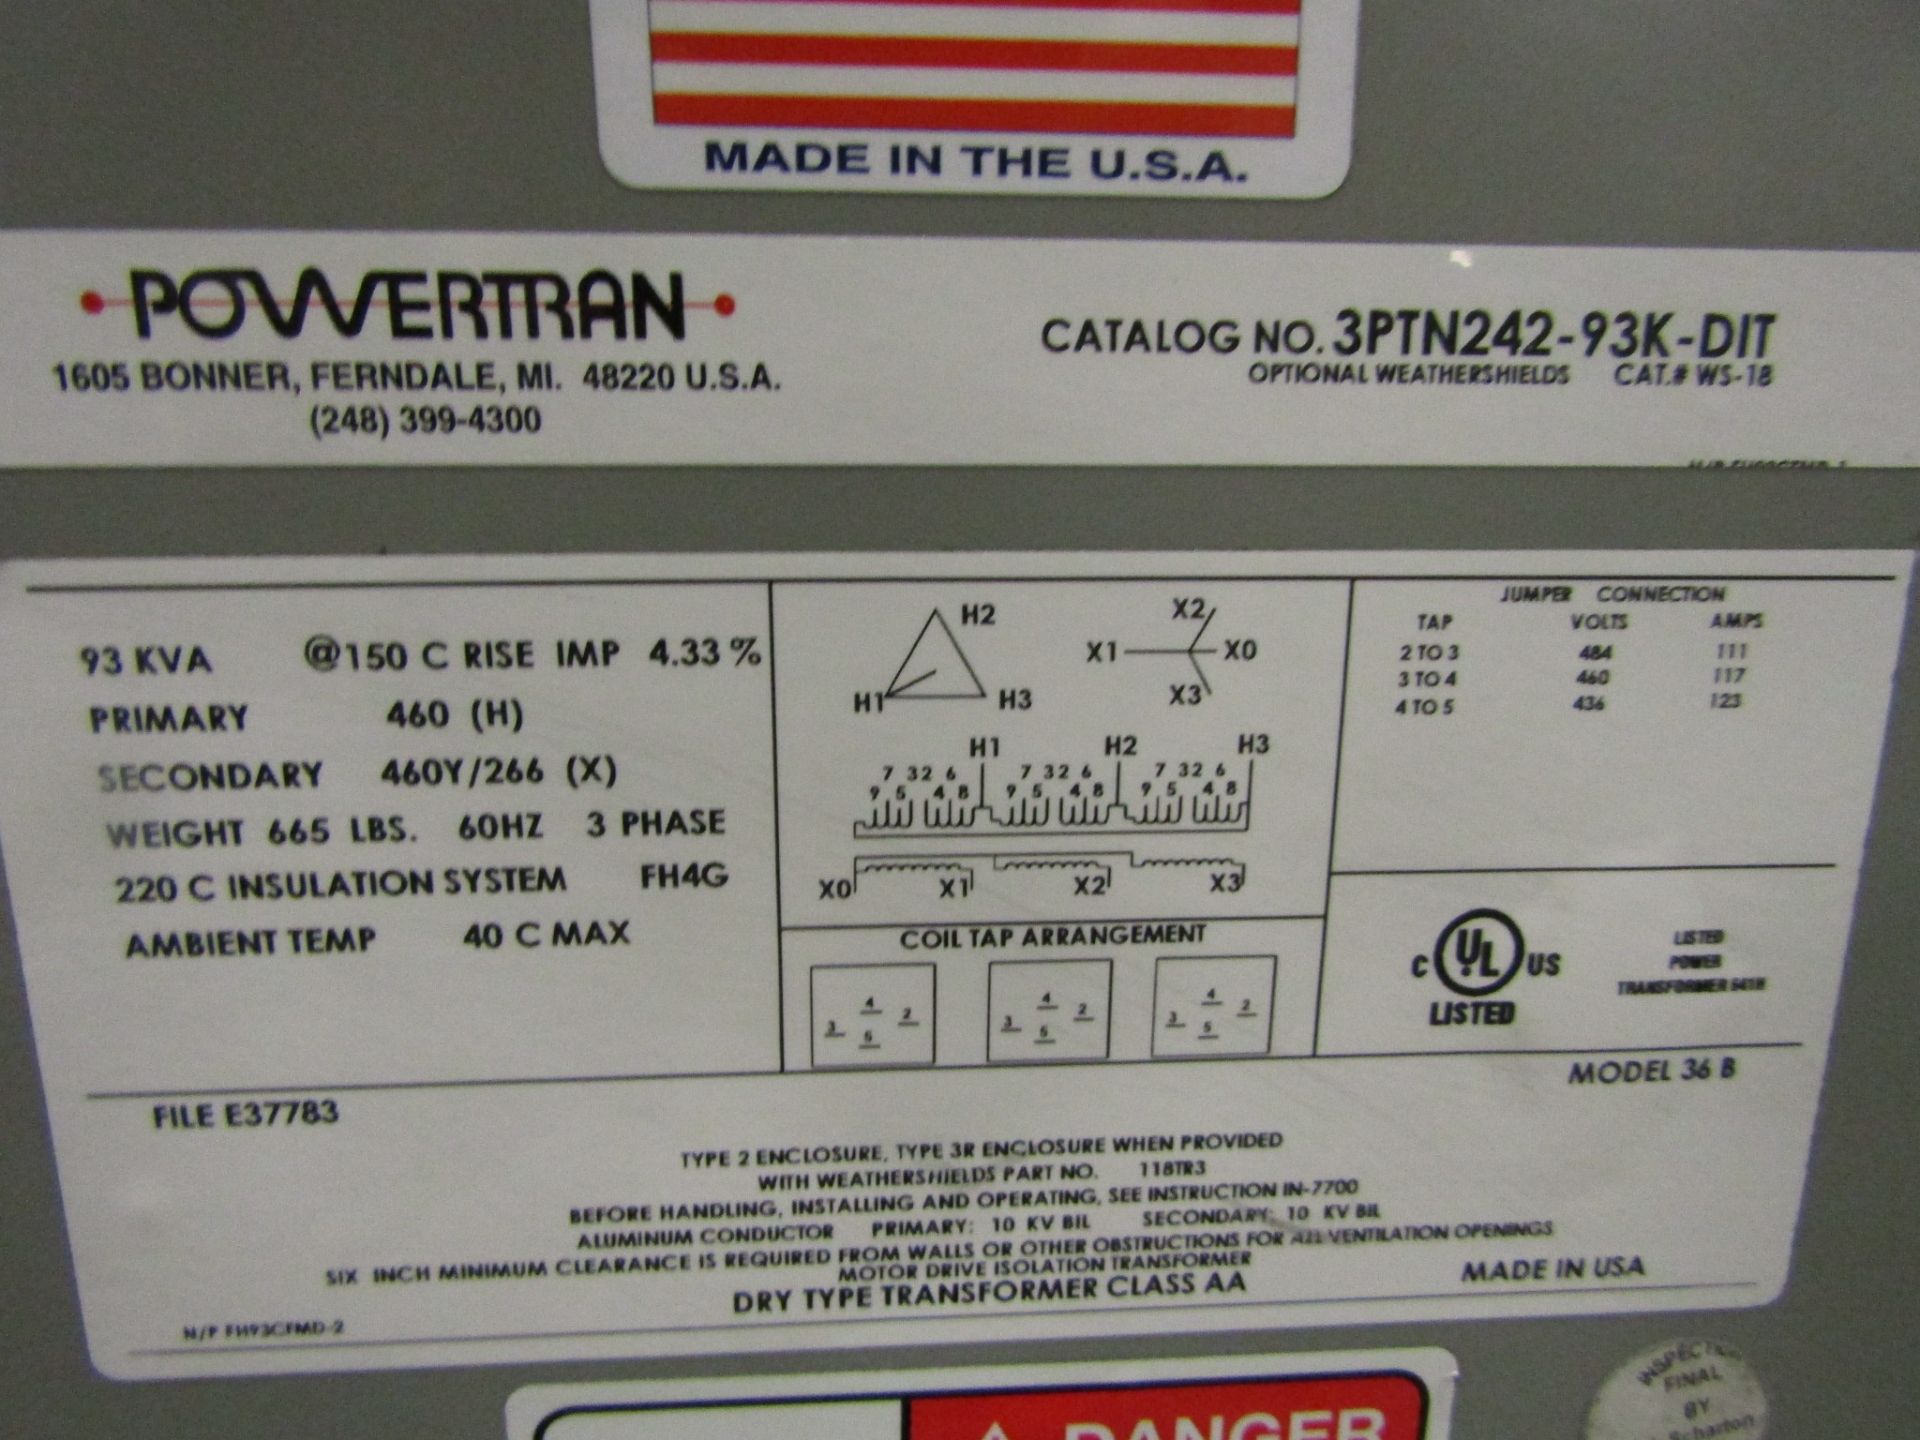 Powertran 93 KVA Electrical Transformer - 460V to 460Y / 266V 3 phase - Image 2 of 2